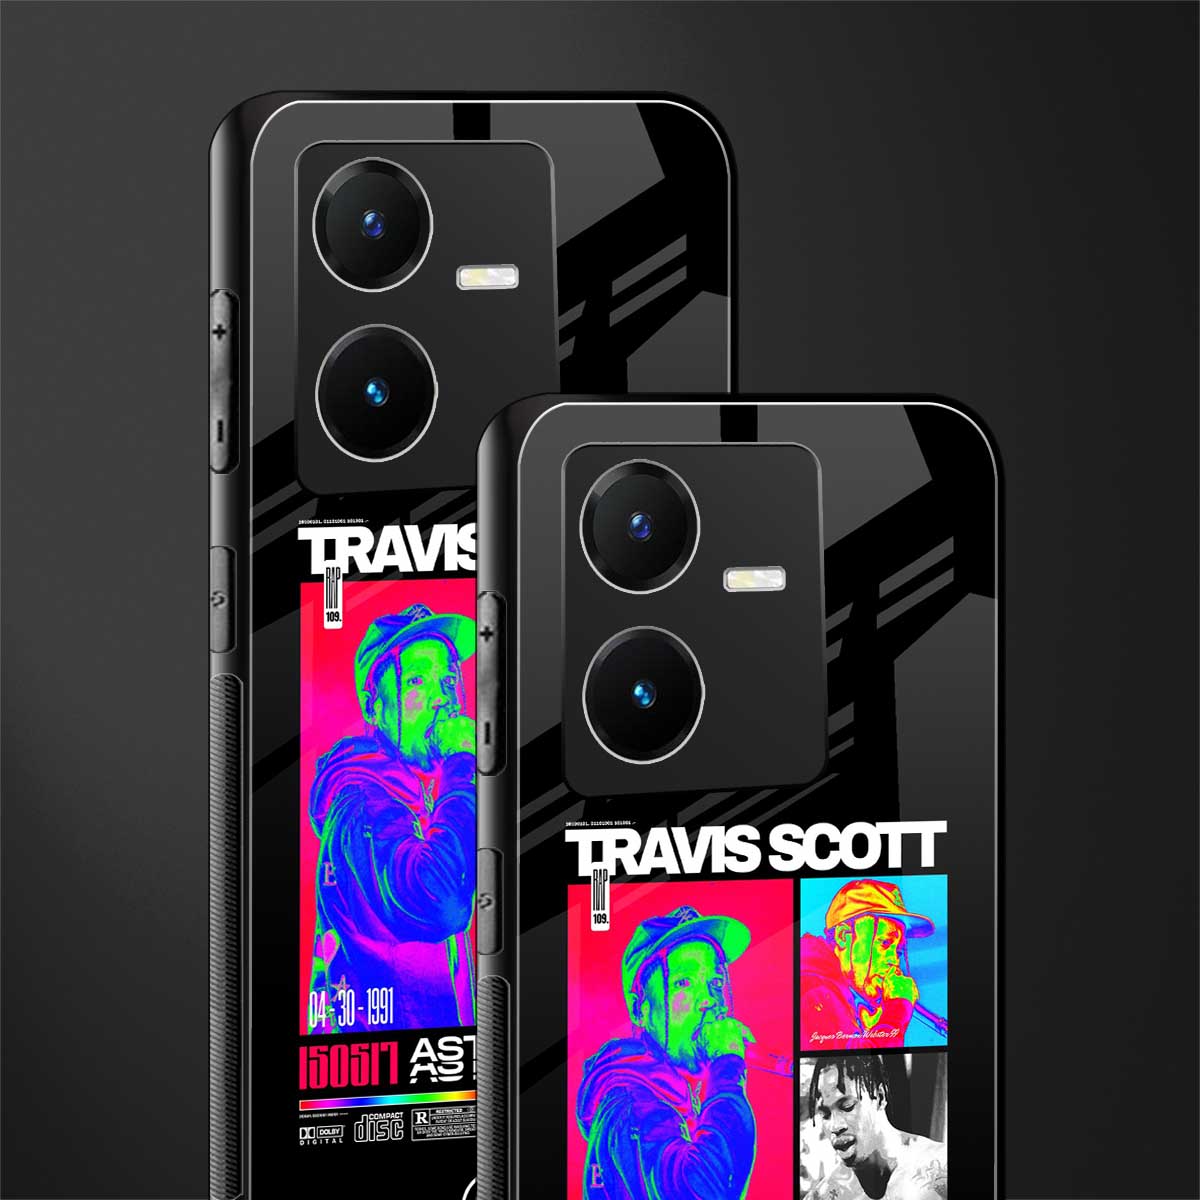 travis scott astroworld back phone cover | glass case for vivo y22